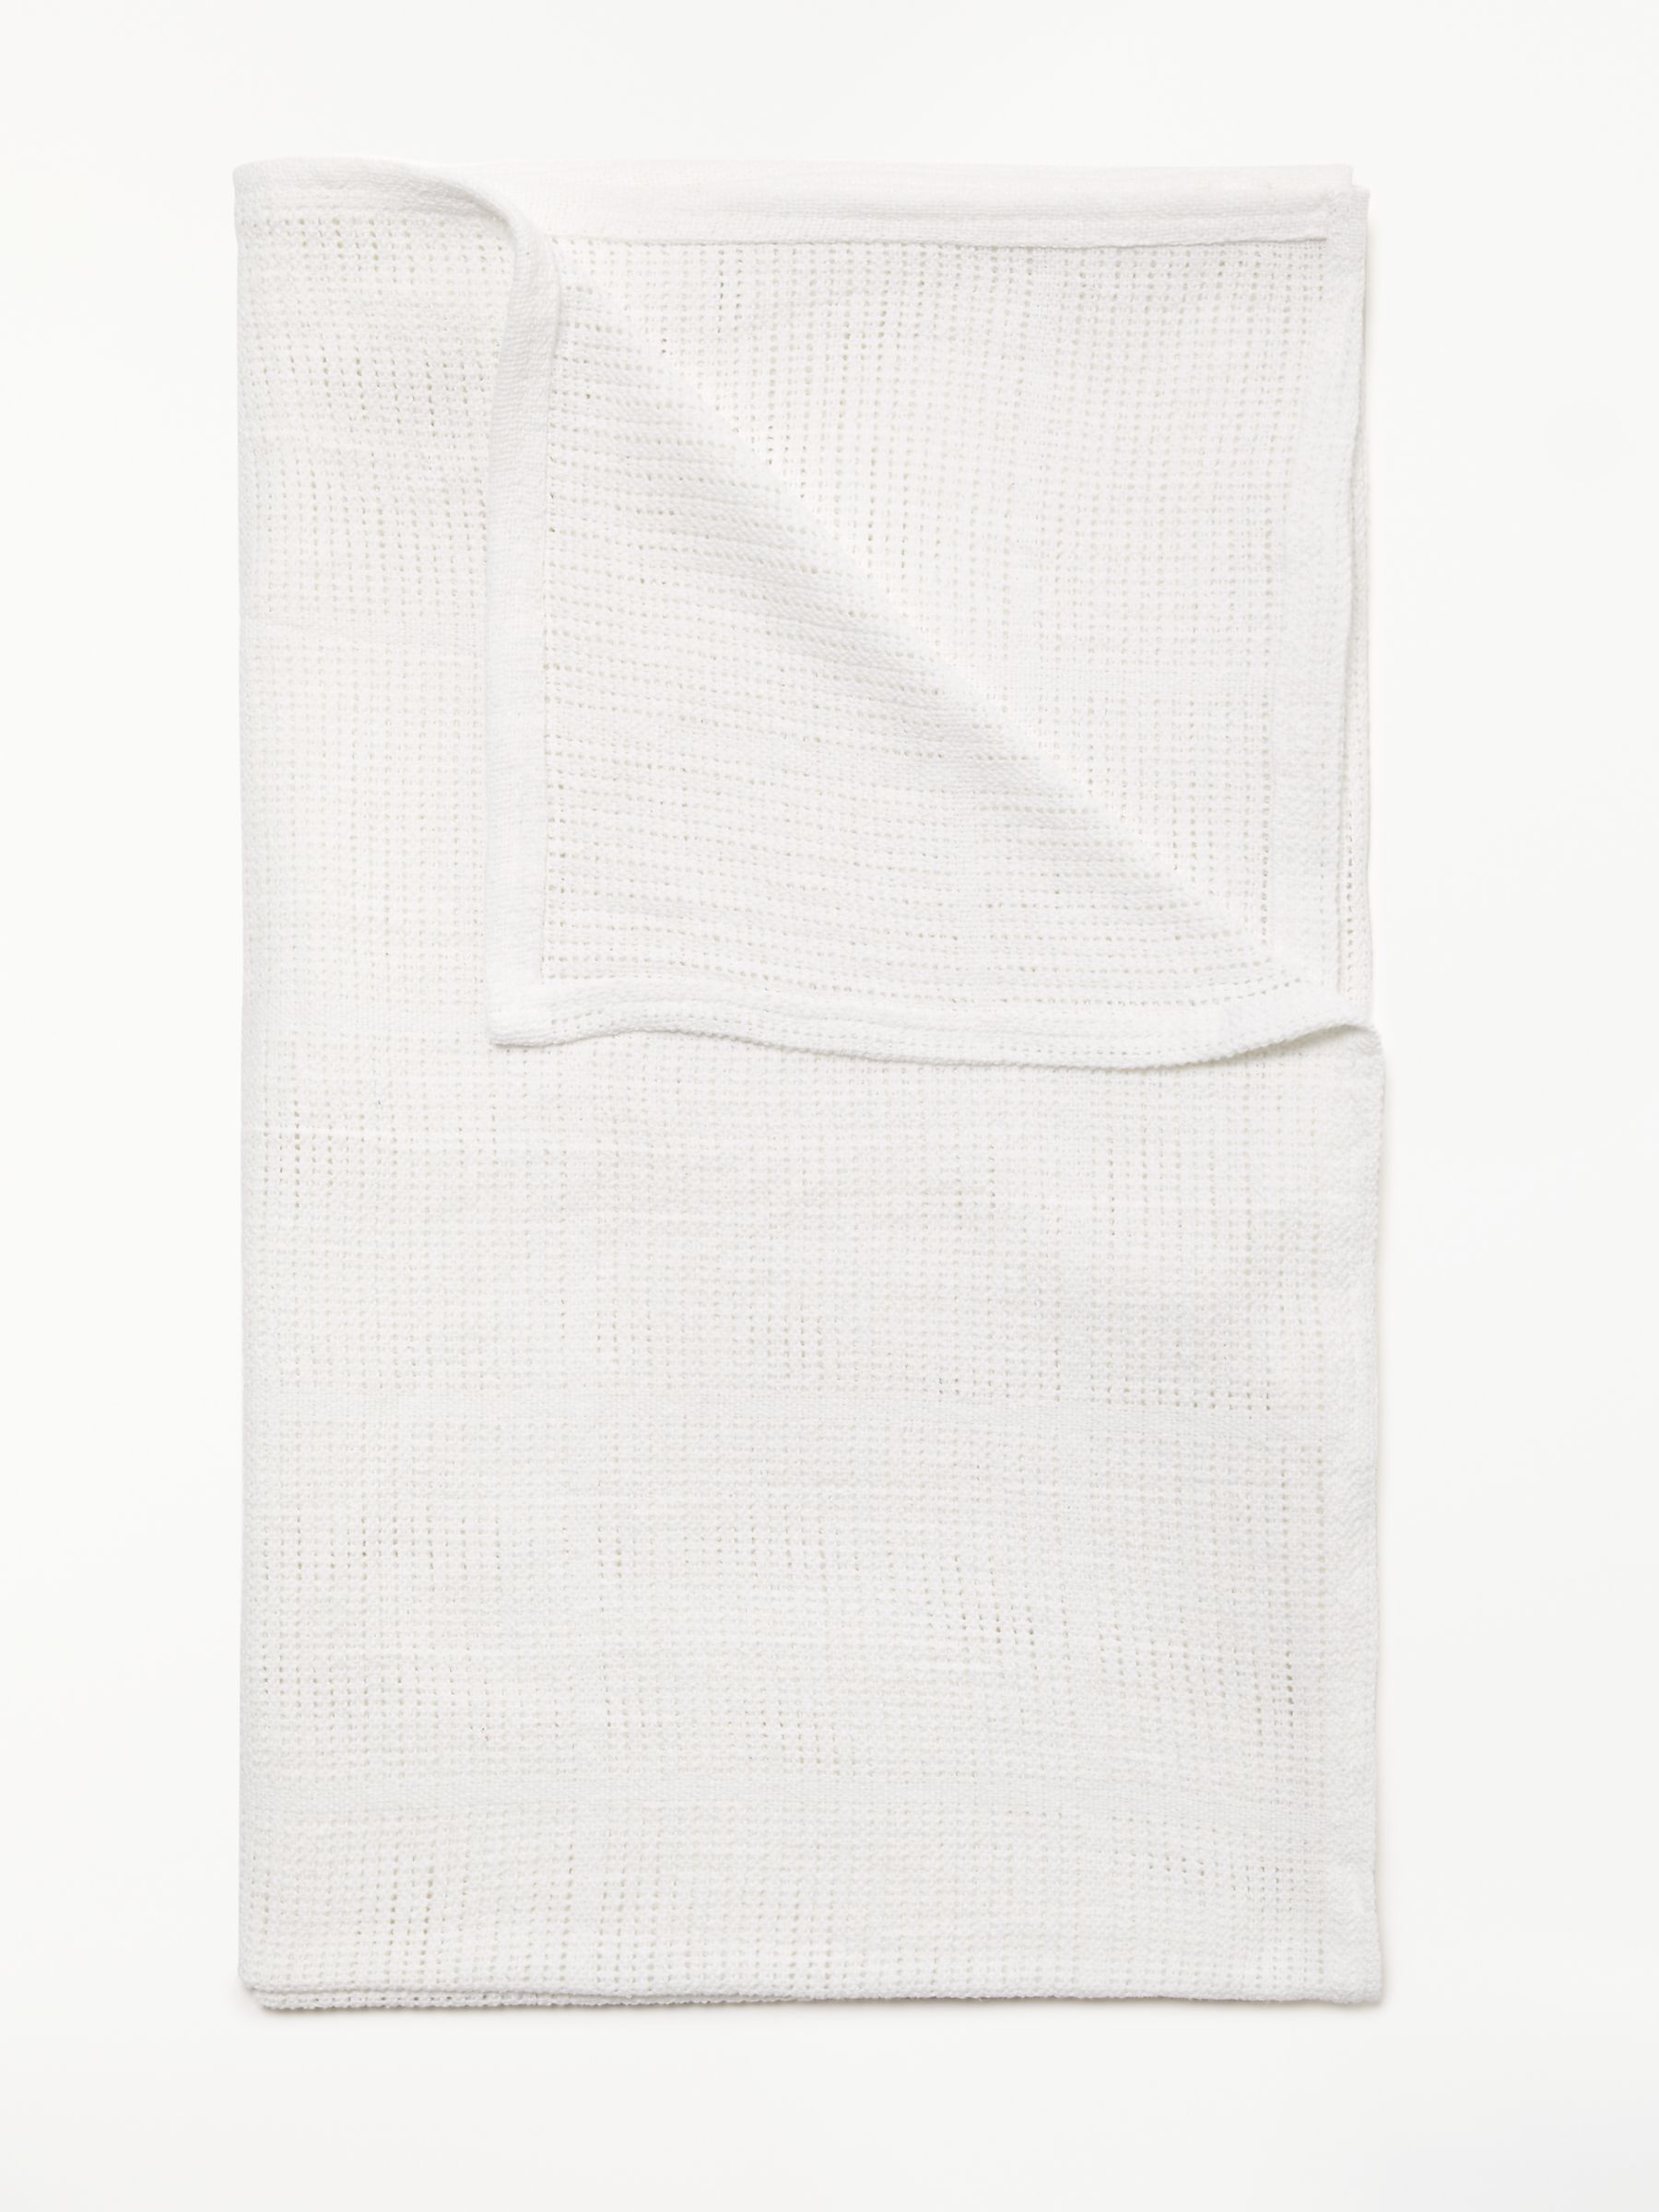 John Lewis & Partners Baby Cellular Pram Blanket, 90 x 70cm